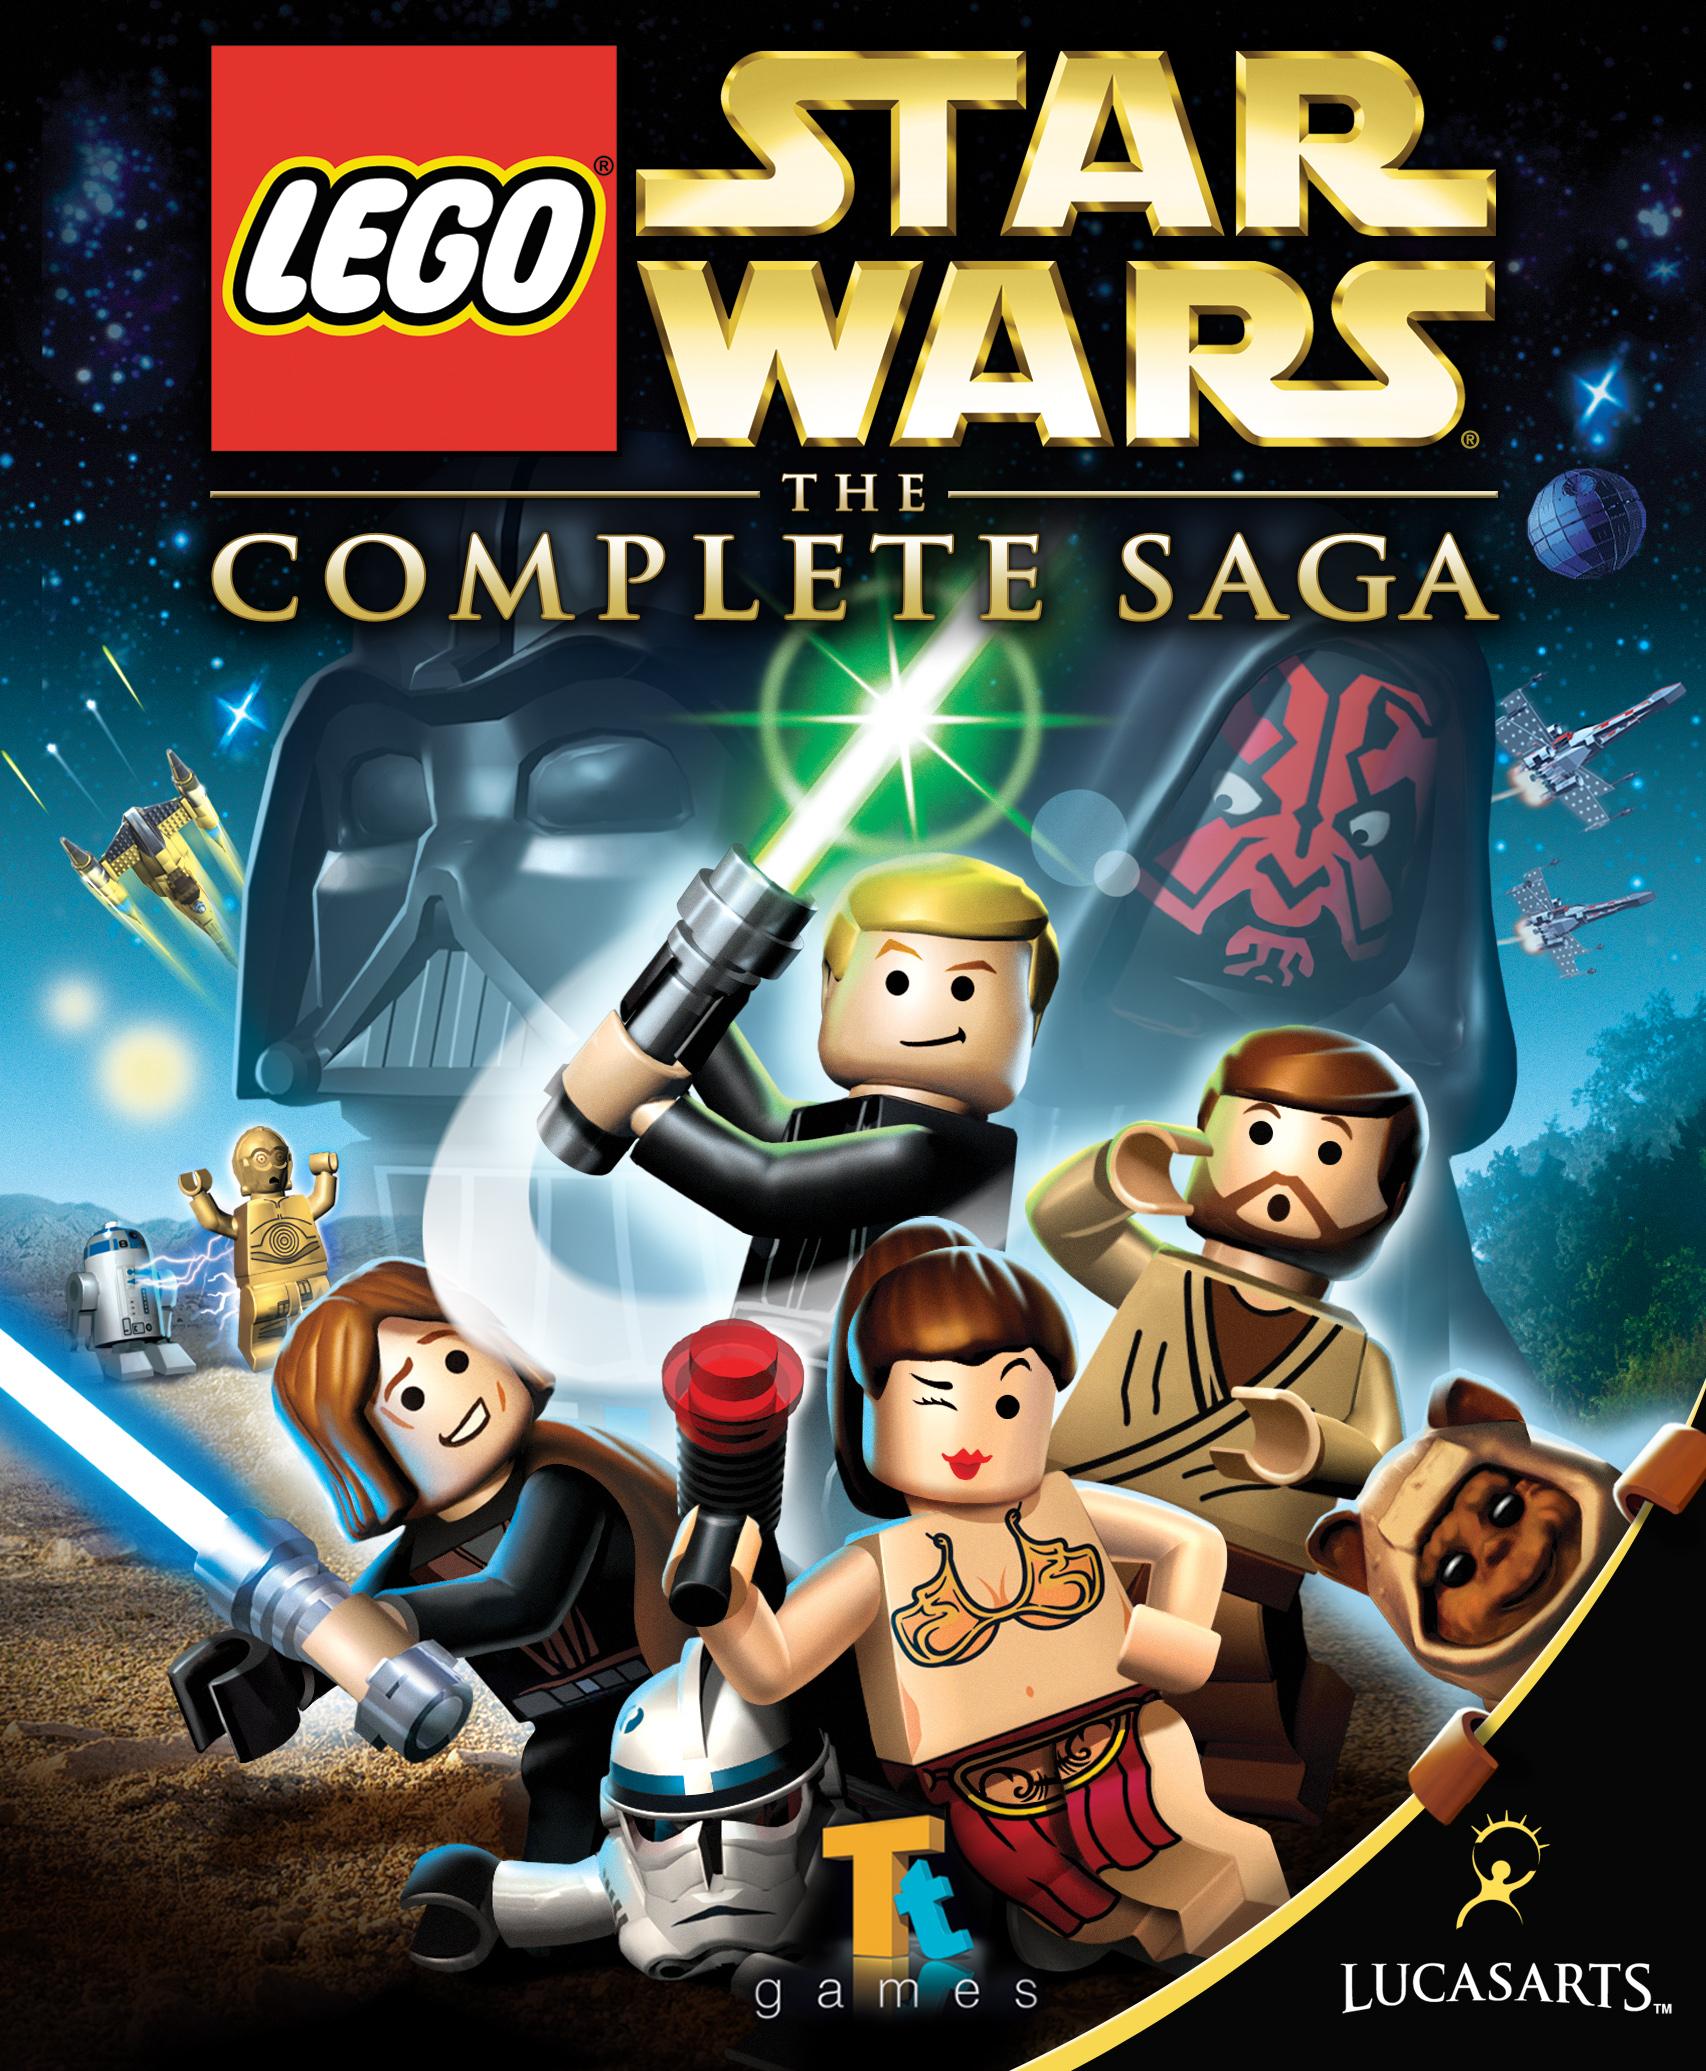 X-Wing, Lego Star Wars Wiki